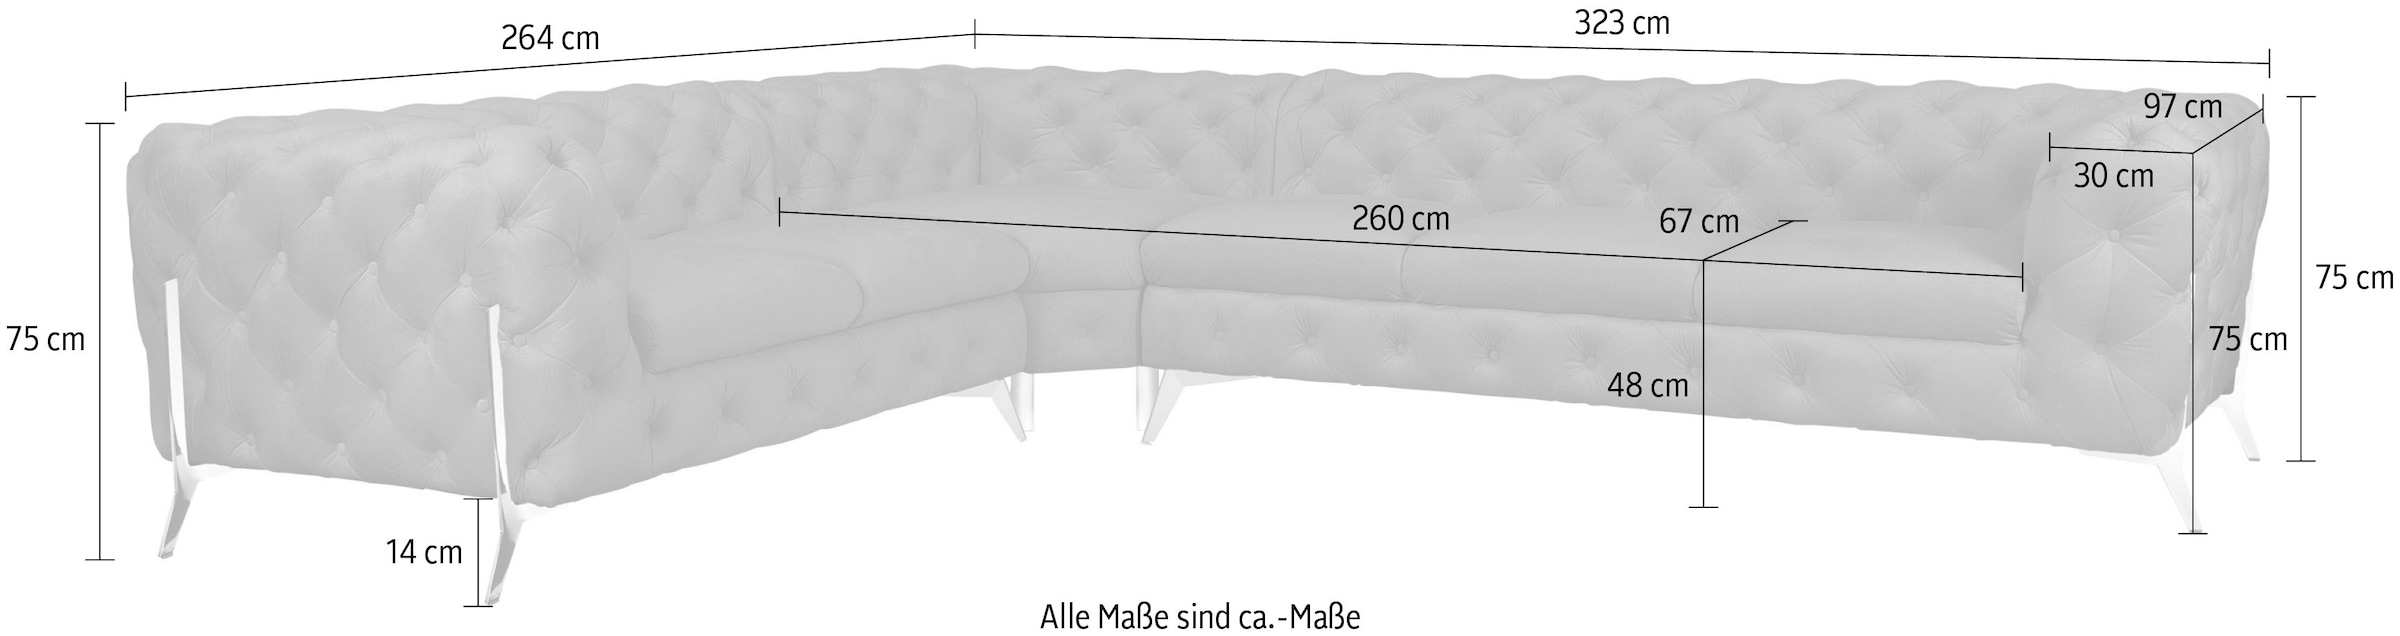 Leonique Chesterfield-Sofa »Amaury L-Form«, großes Ecksofa, Chesterfield-Optik, Breite 323 cm, Fußfarbe wählbar